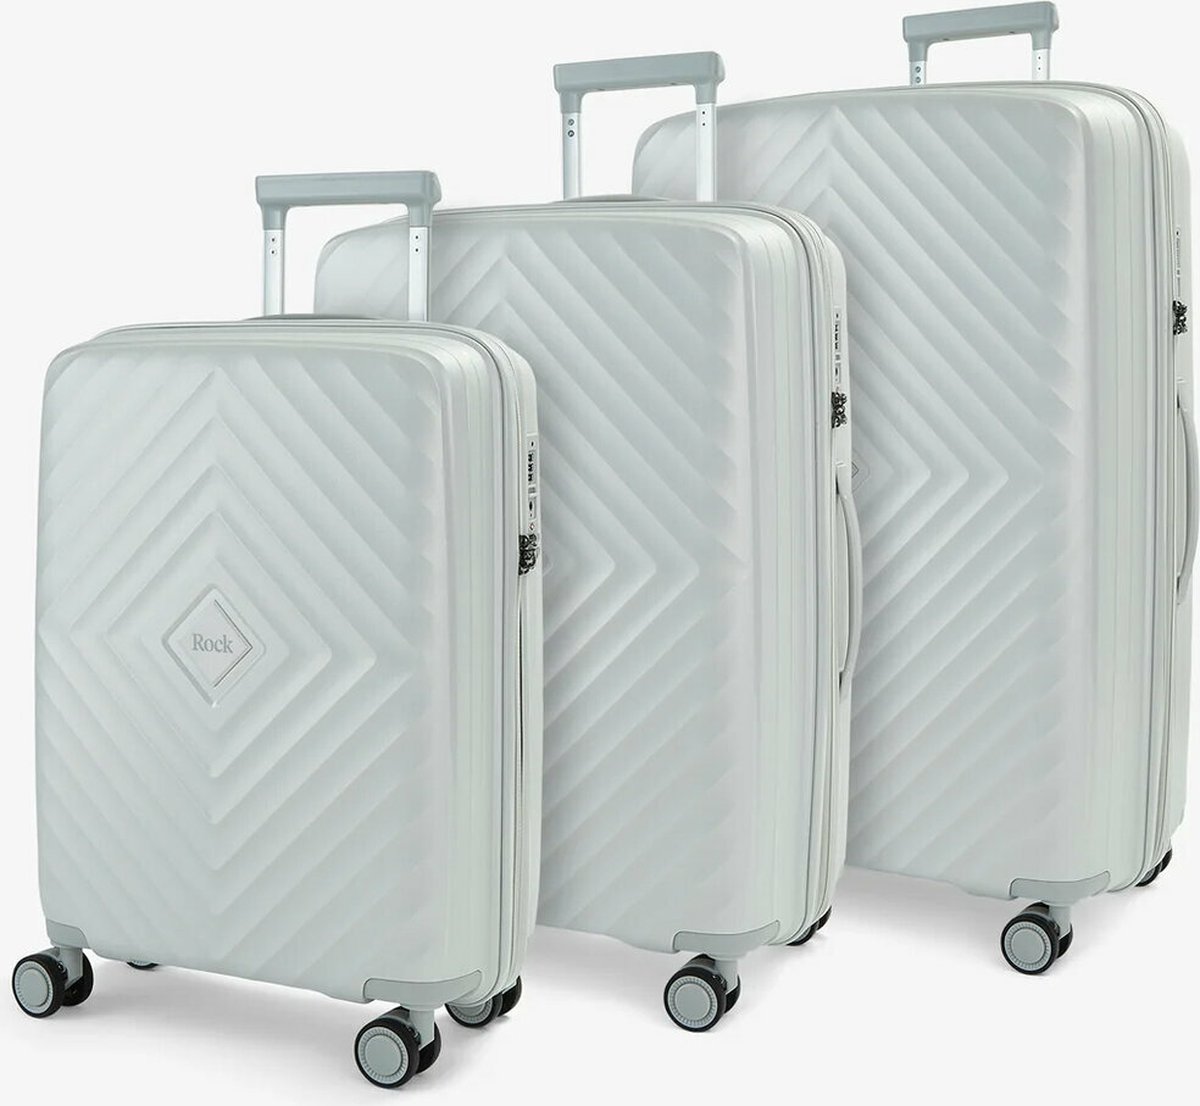 Koffer set - Trolleyset 3-delig met TSA cijferslot - Dubbel Rits - PP silicone koffer - Rock